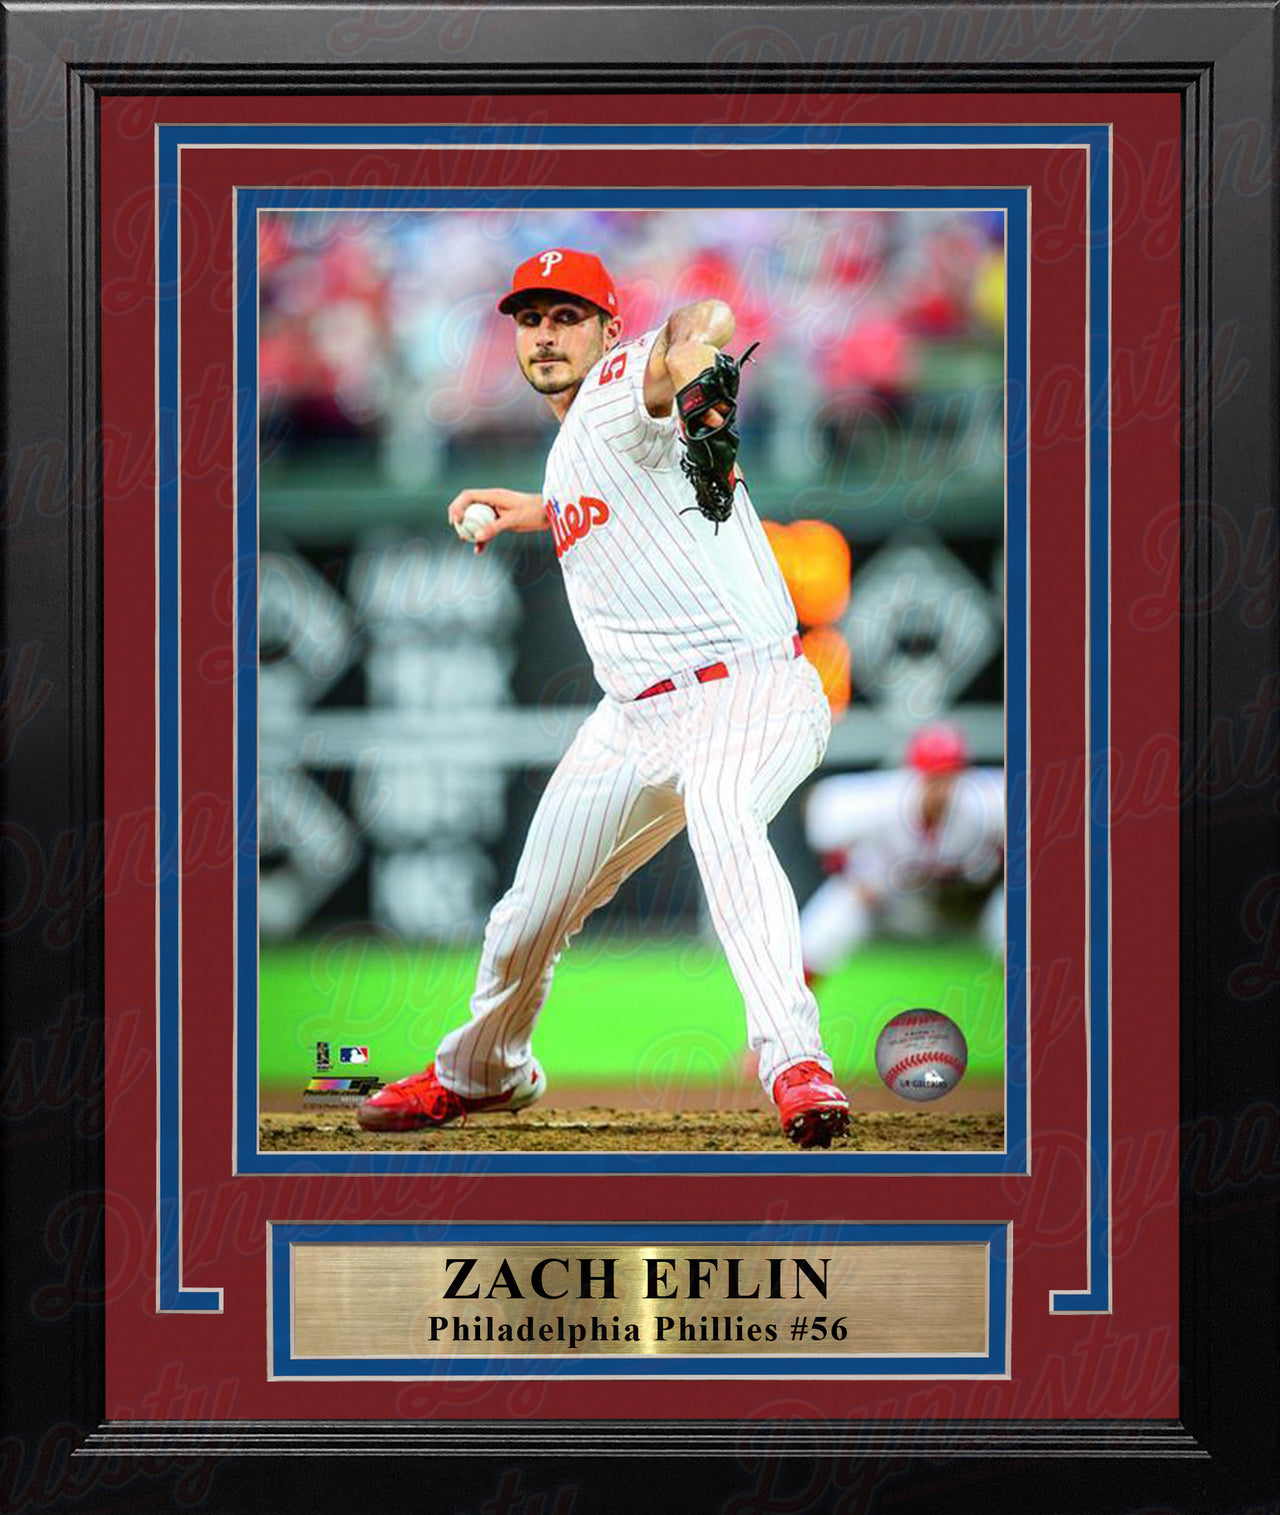 Zach Eflin Philadelphia Phillies on the Mound MLB Baseball 8" x 10" Framed and Matted Photo - Dynasty Sports & Framing 